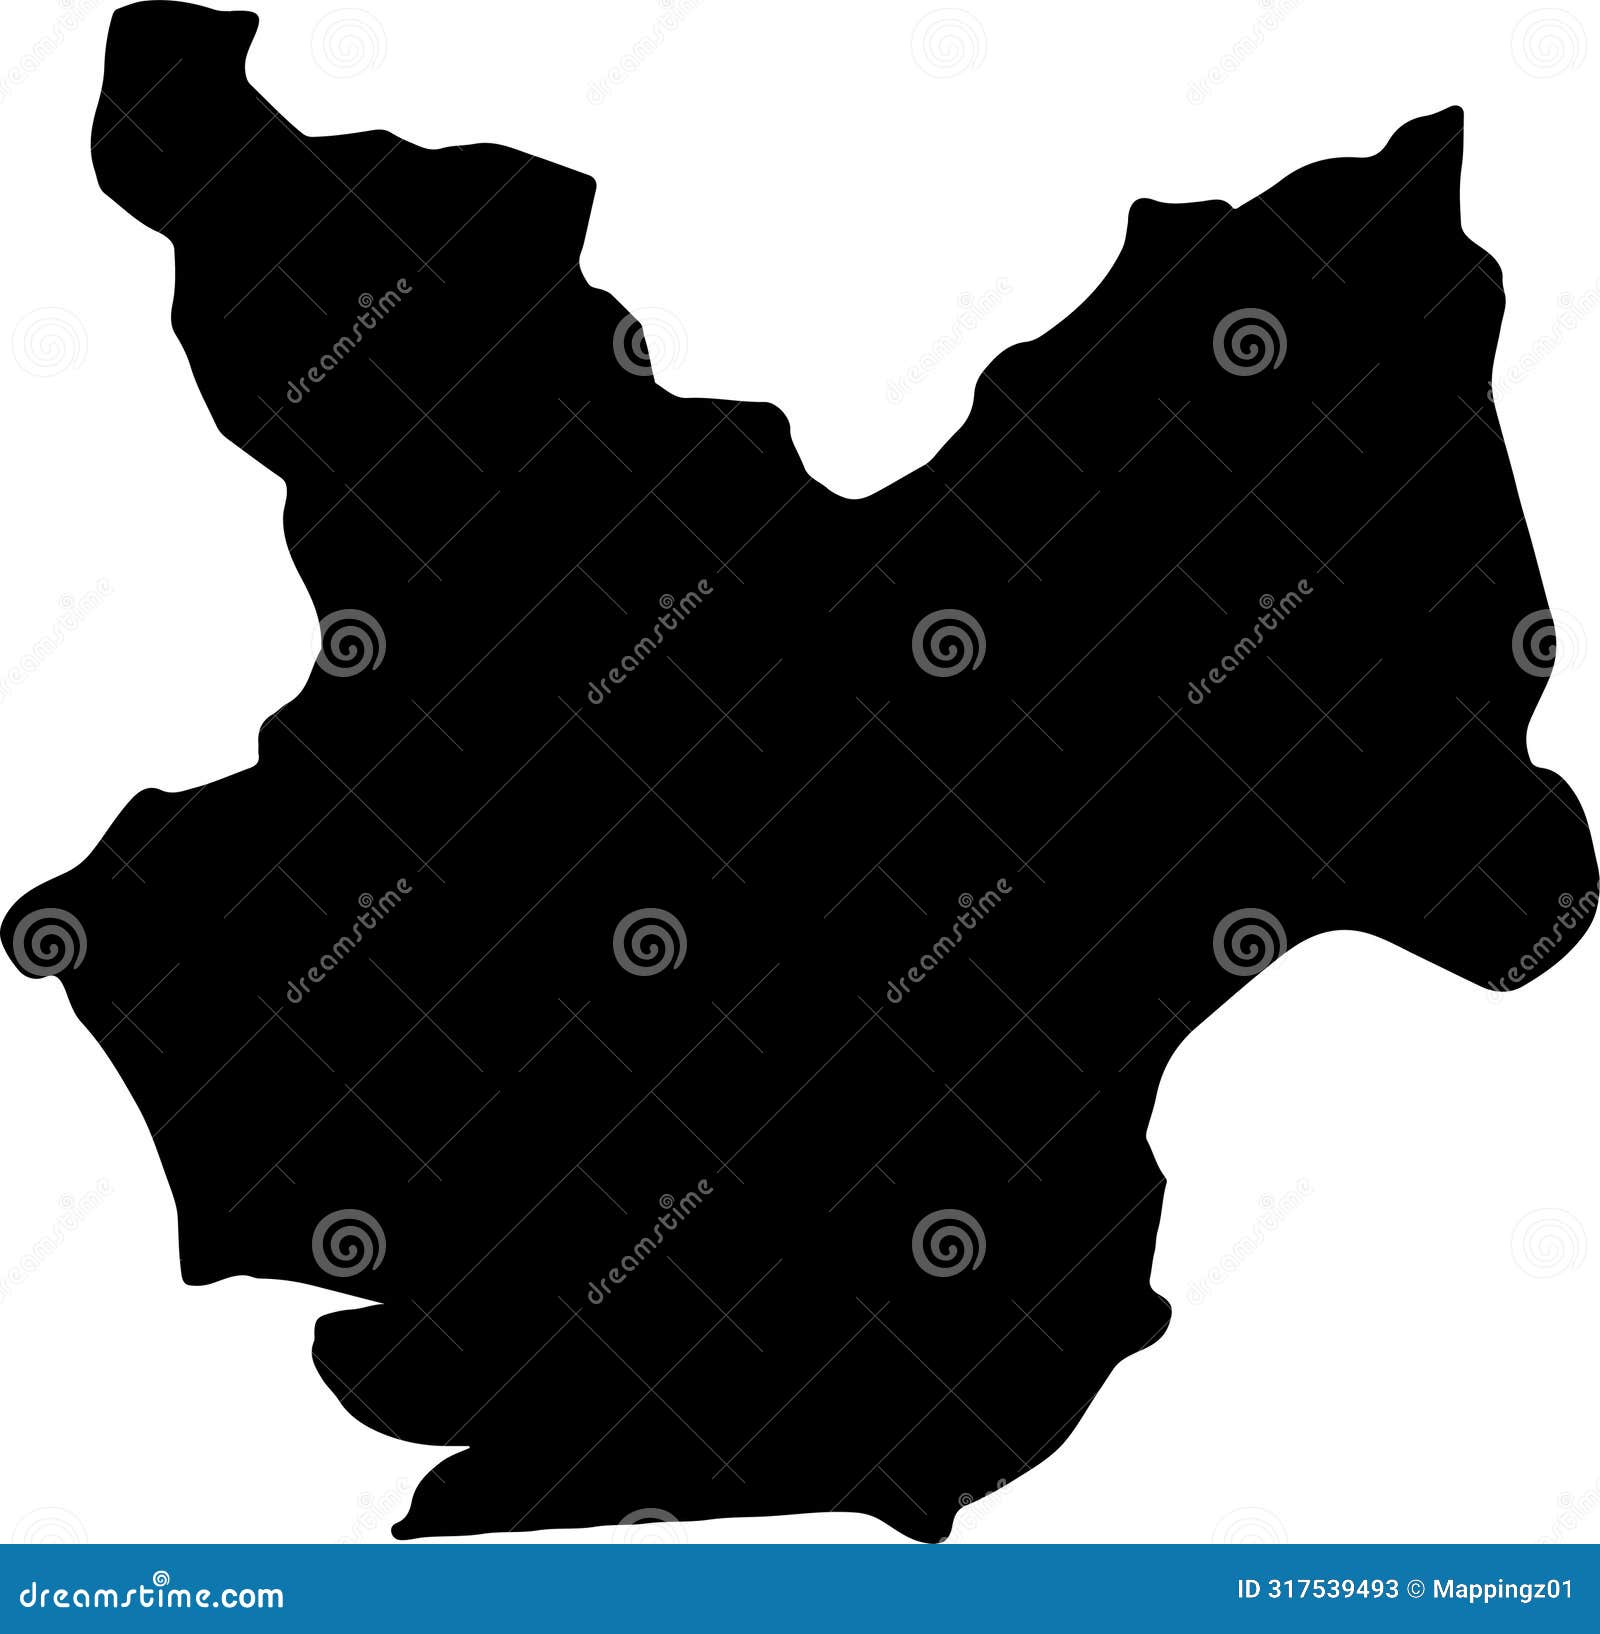 choluteca honduras silhouette map with transparent background